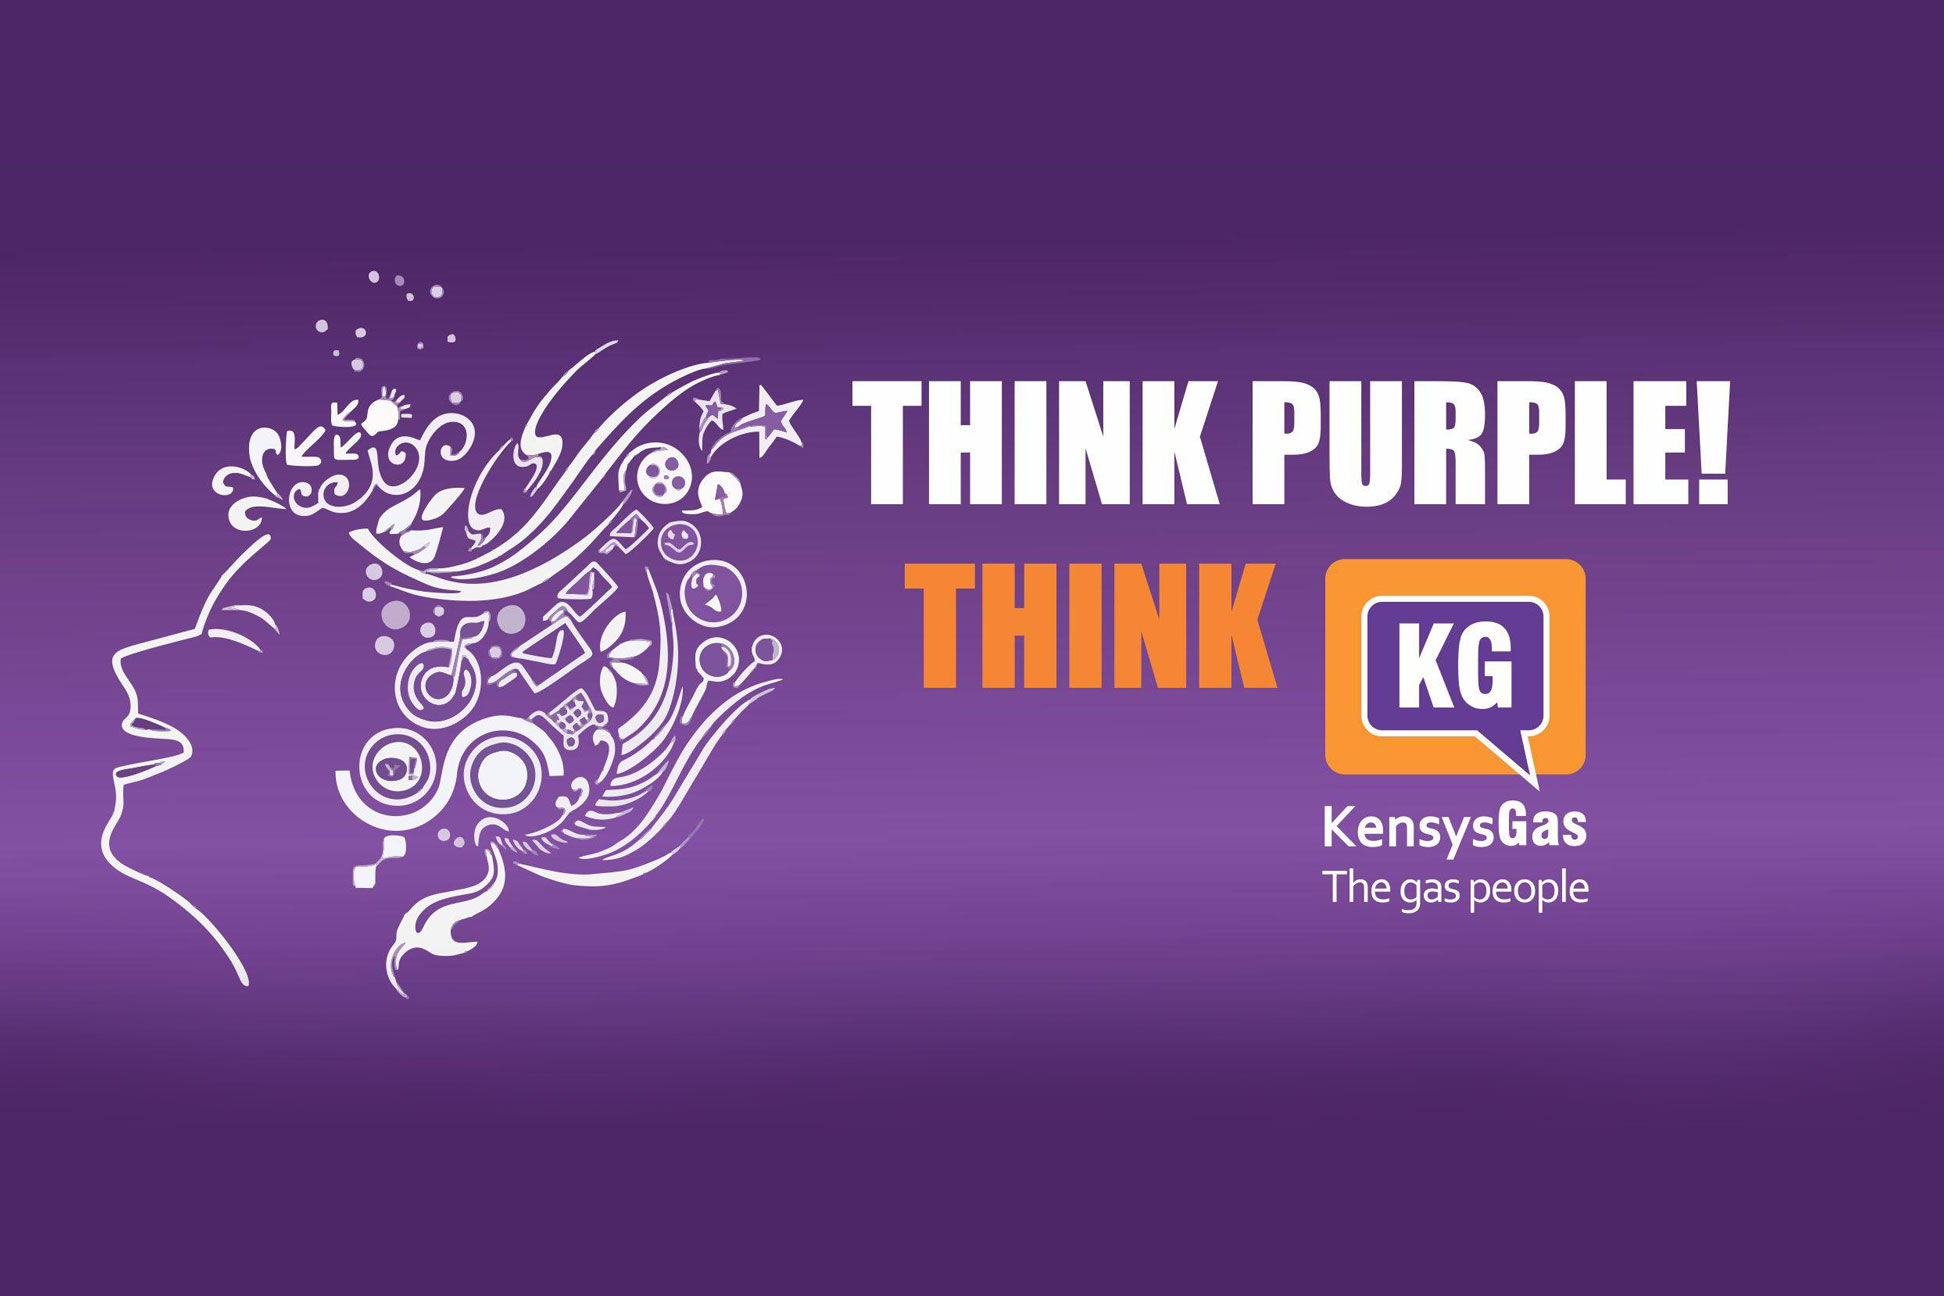 kensys gas slogan